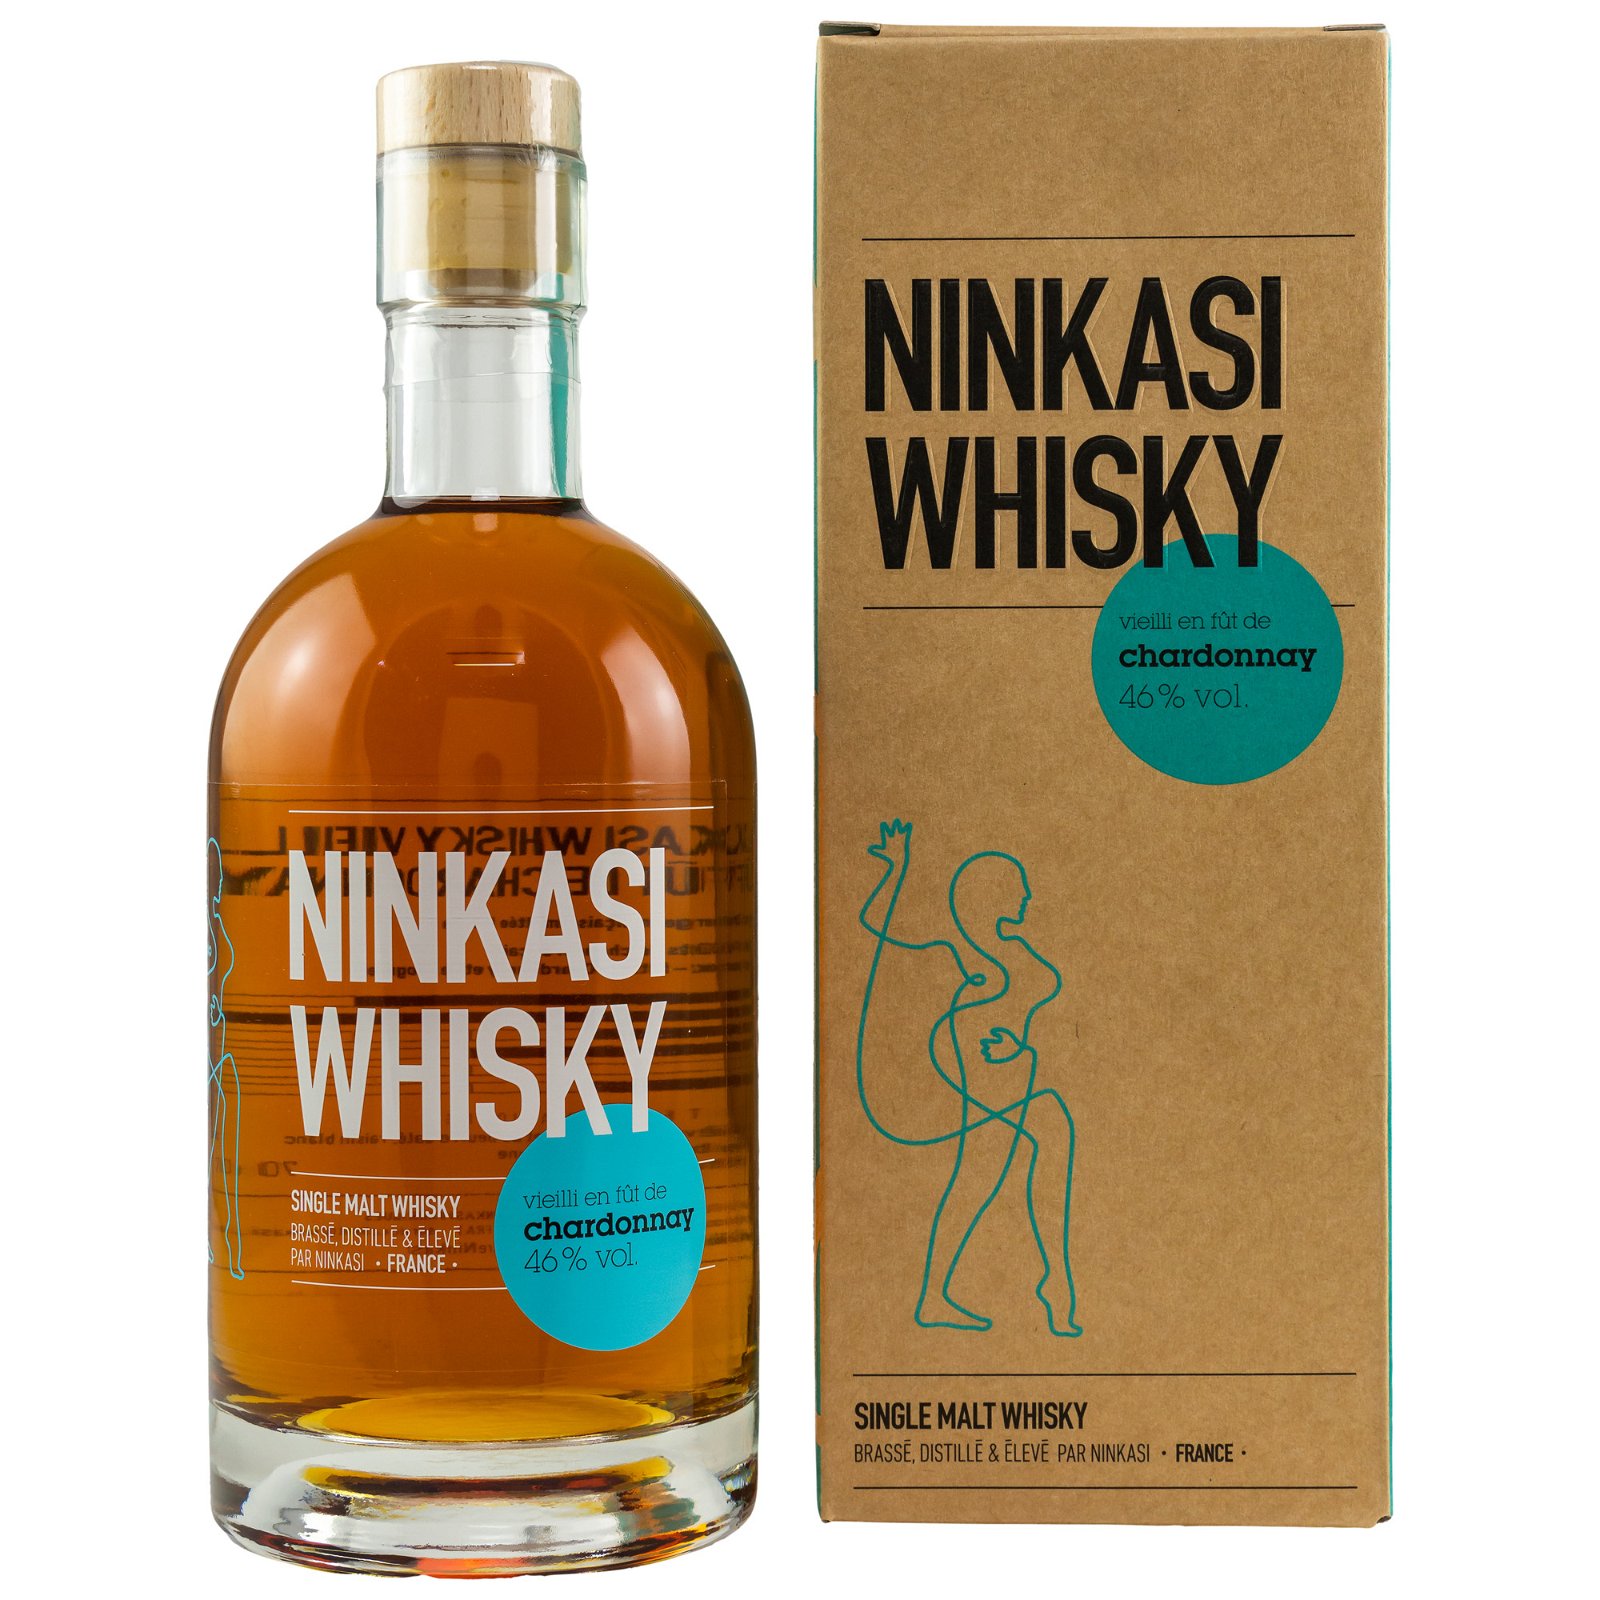 Ninkasi Whisky Chardonnay Cask